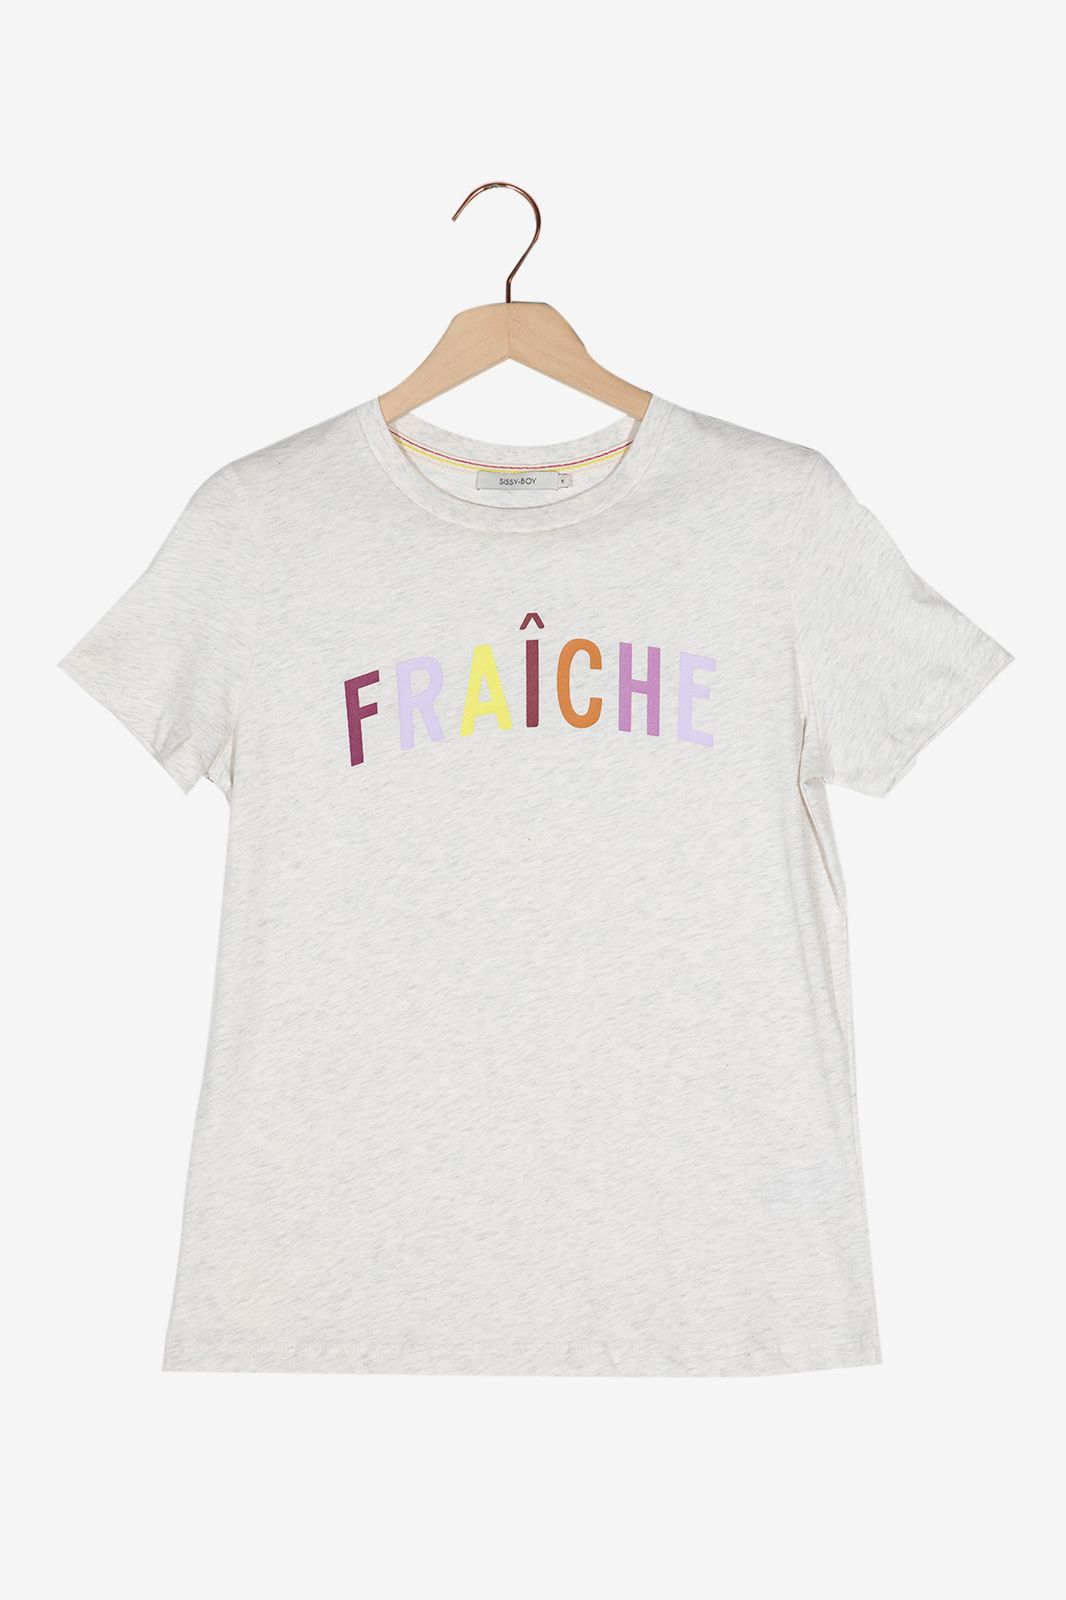 Spreekwoord doorgaan Beïnvloeden Grijs T-shirt Fraiche - Dames | Sissy-Boy